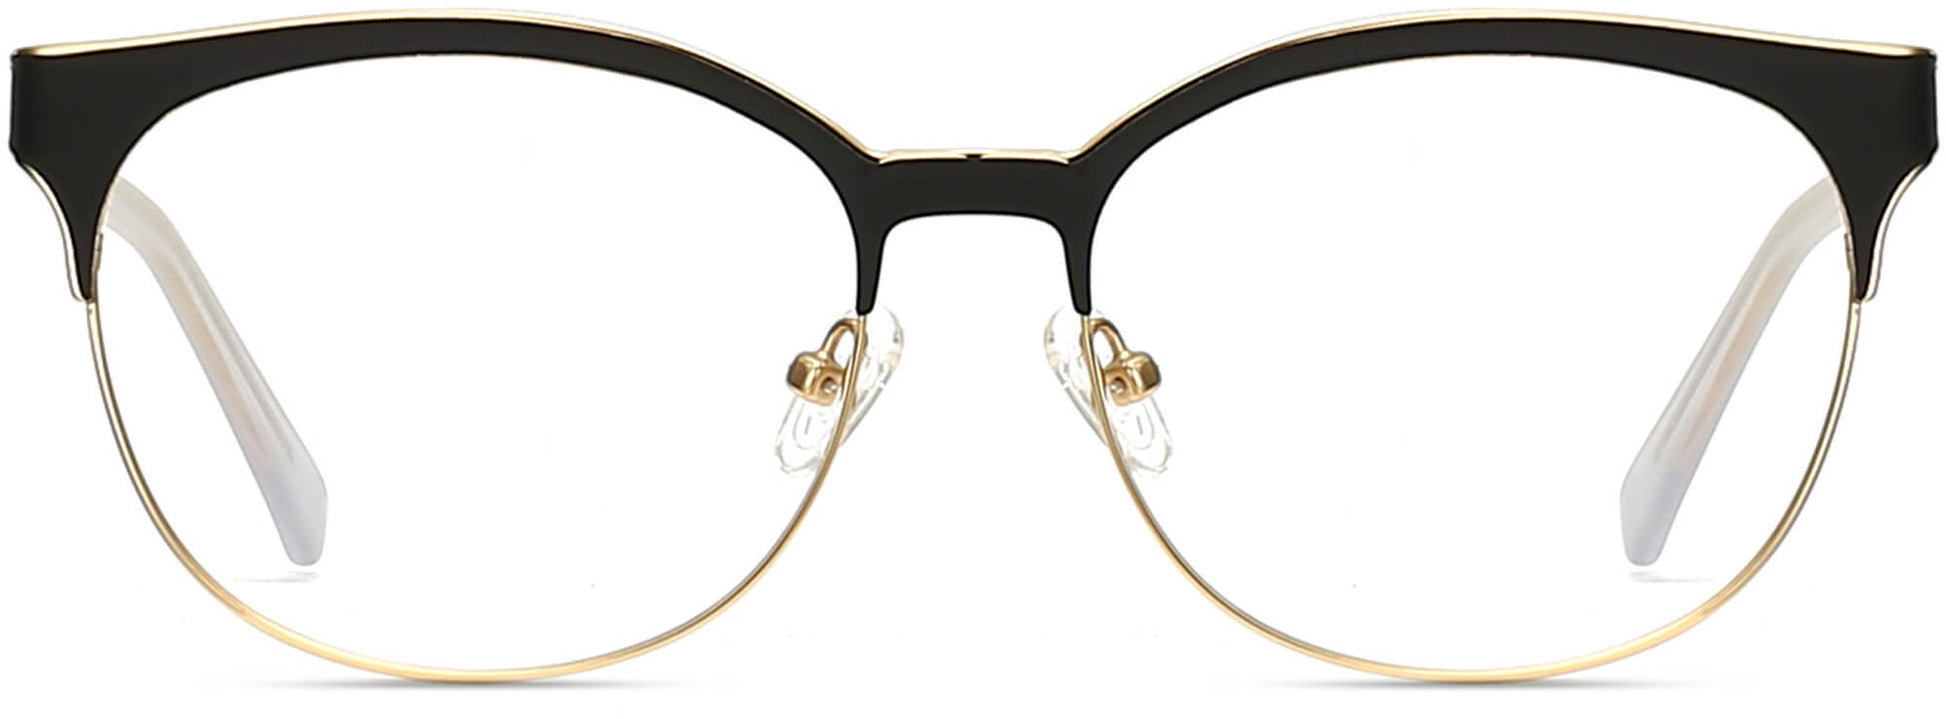 Hallie Round Black Eyeglasses from ANRRI, front view